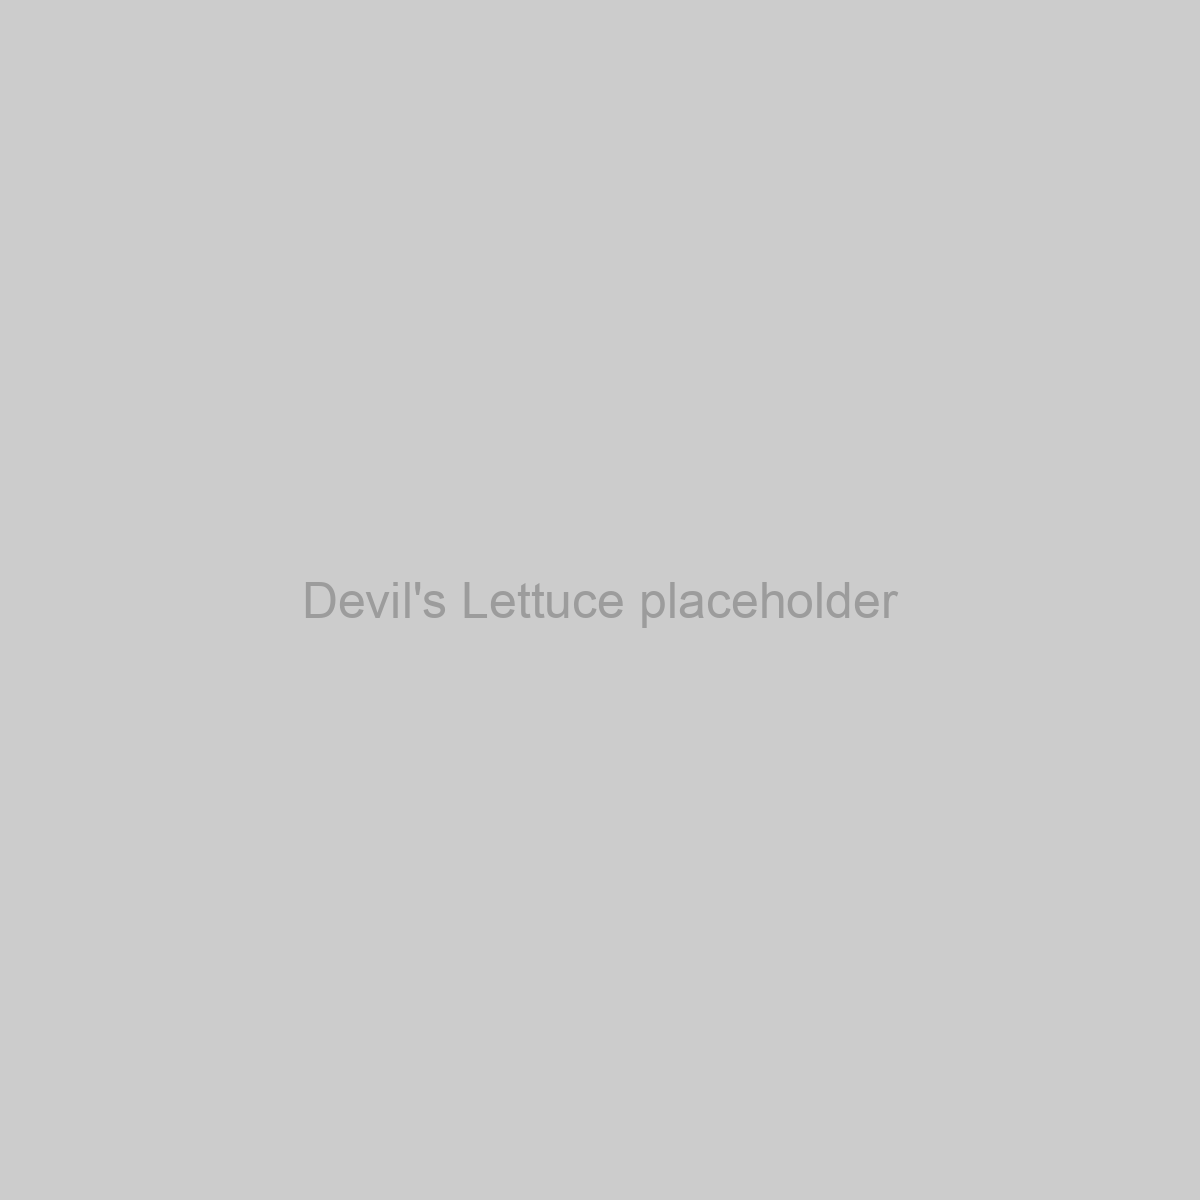 Devil's Lettuce Placeholder Image